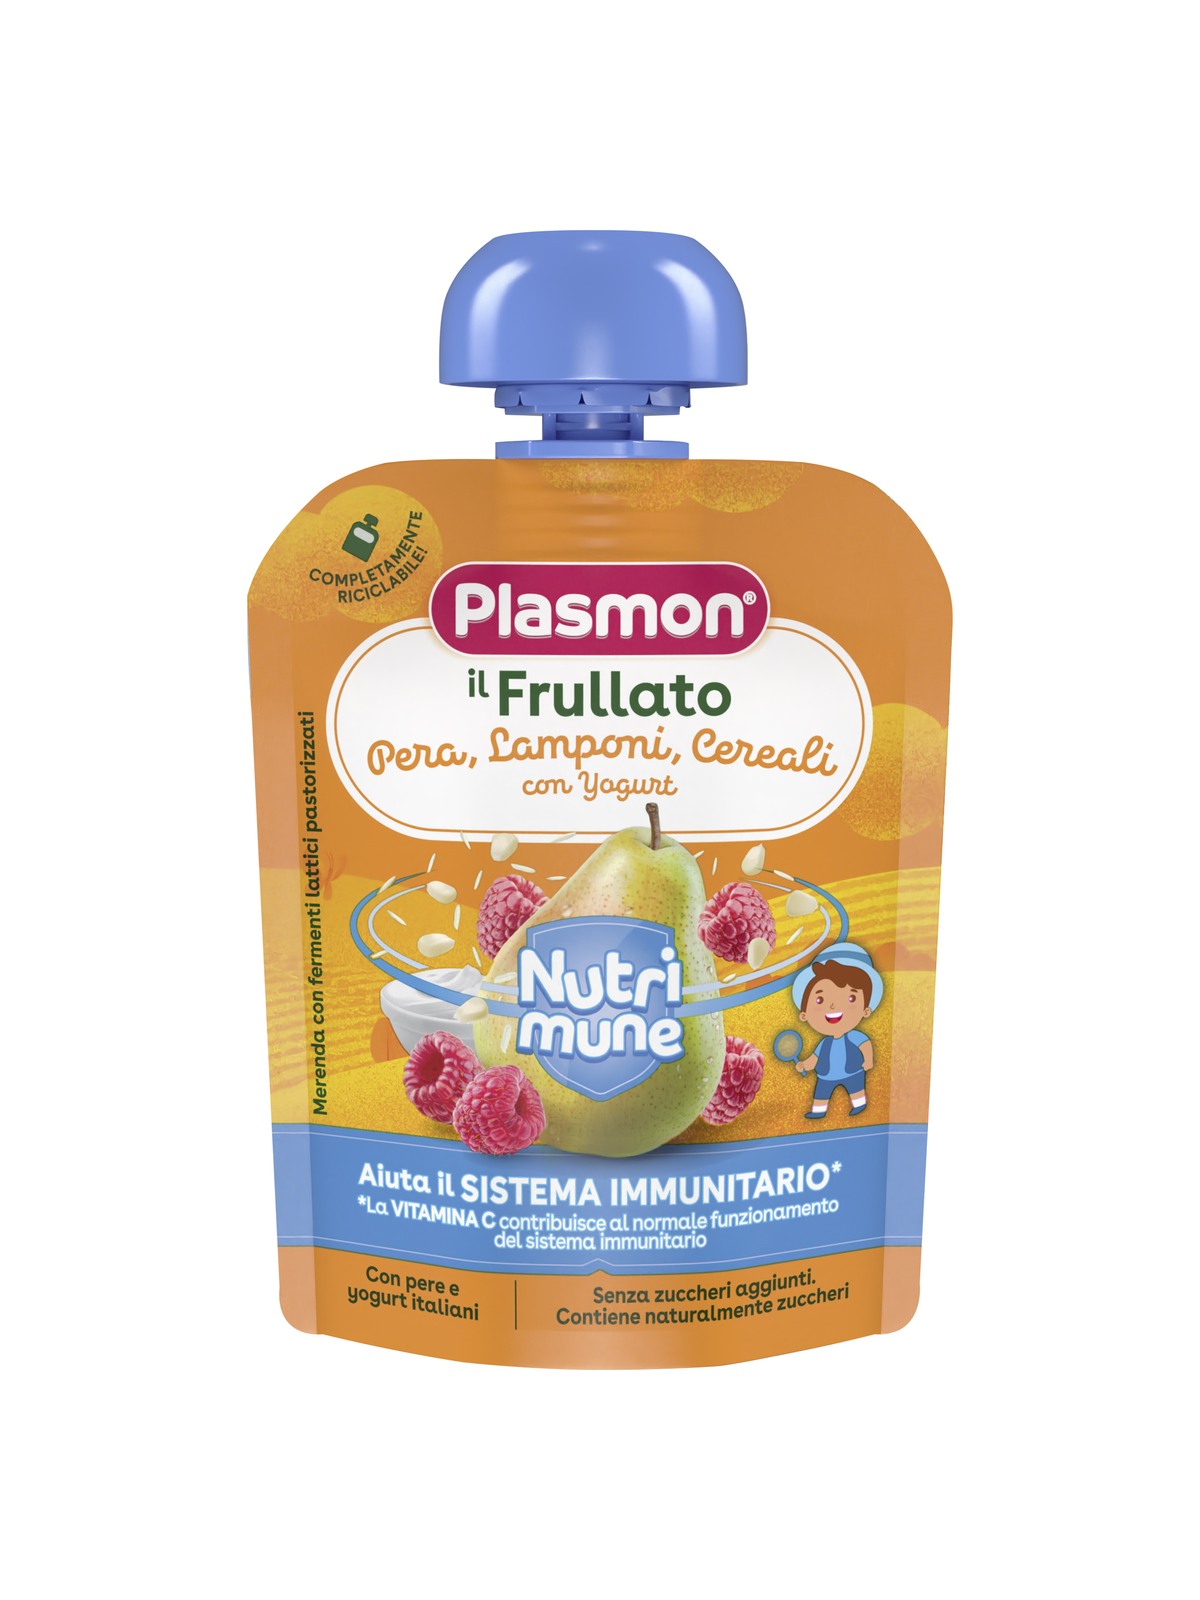 Plasmon il frullato pera, lamponi cereali con yogurt - 85g - PLASMON